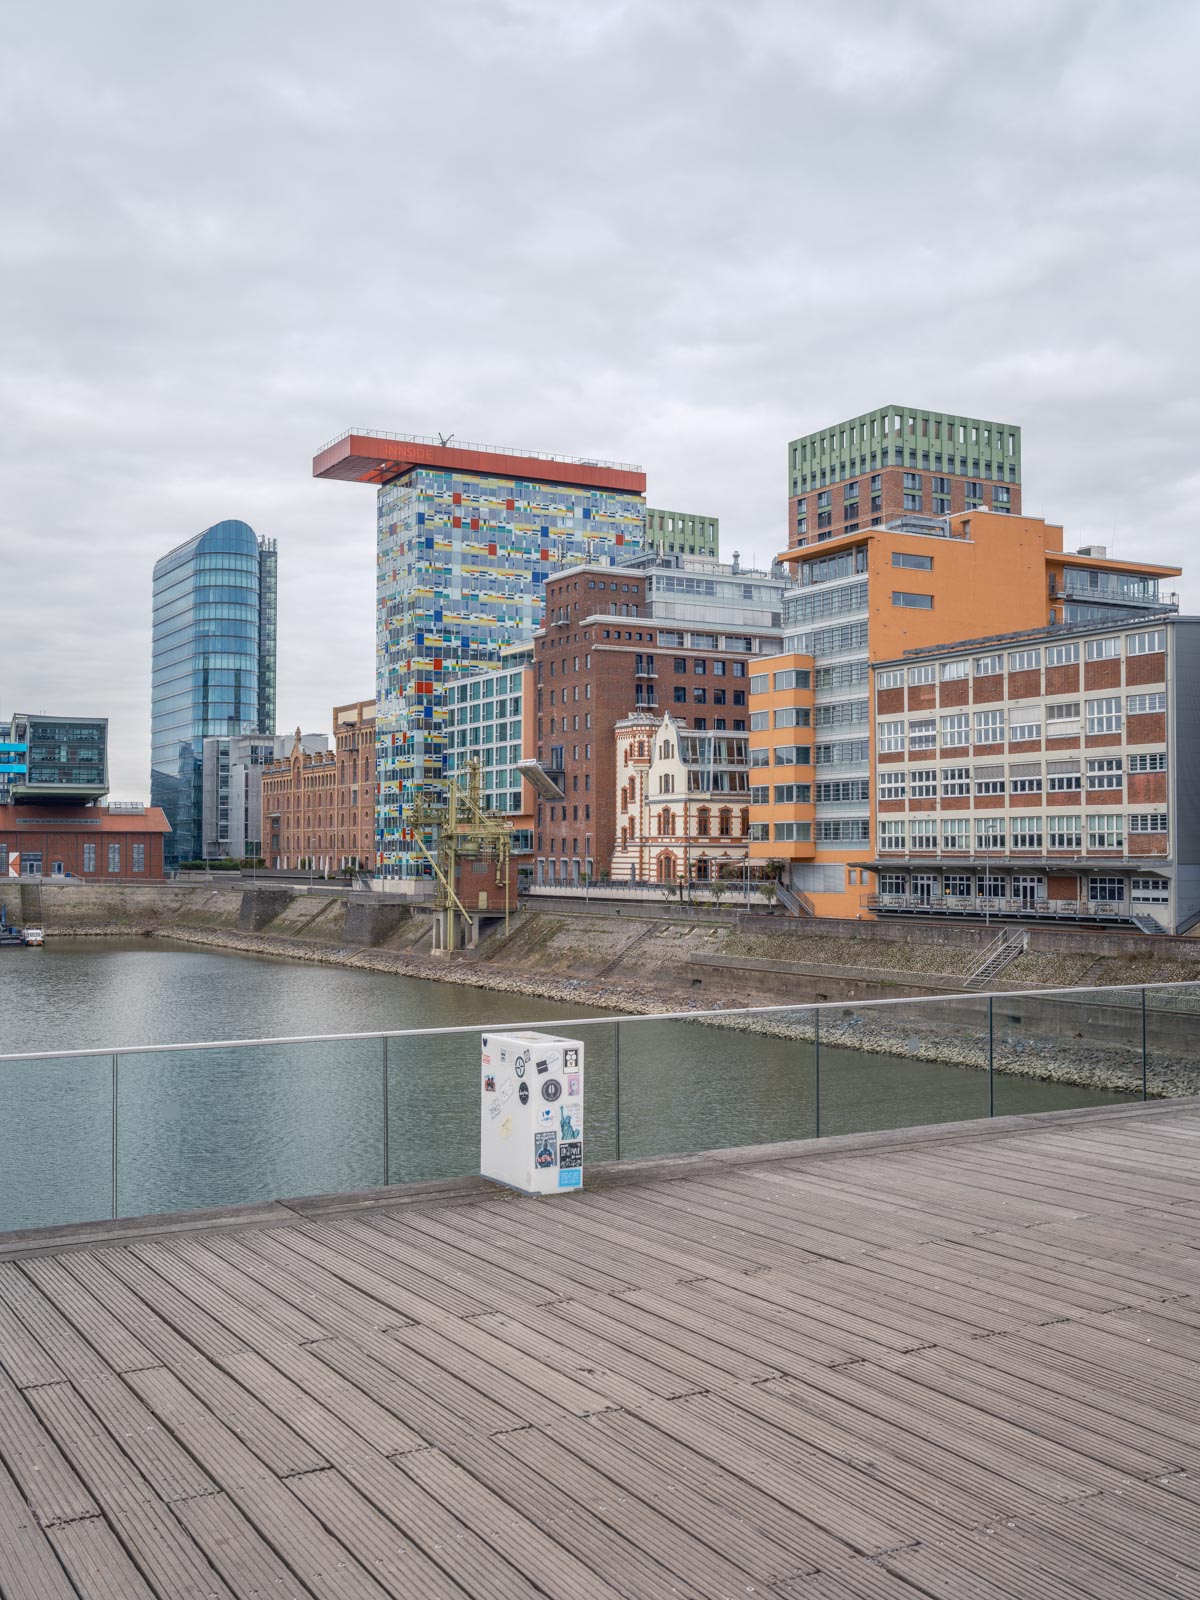 New architecture at 'Media Harbour' (Düsseldorf, Germany).